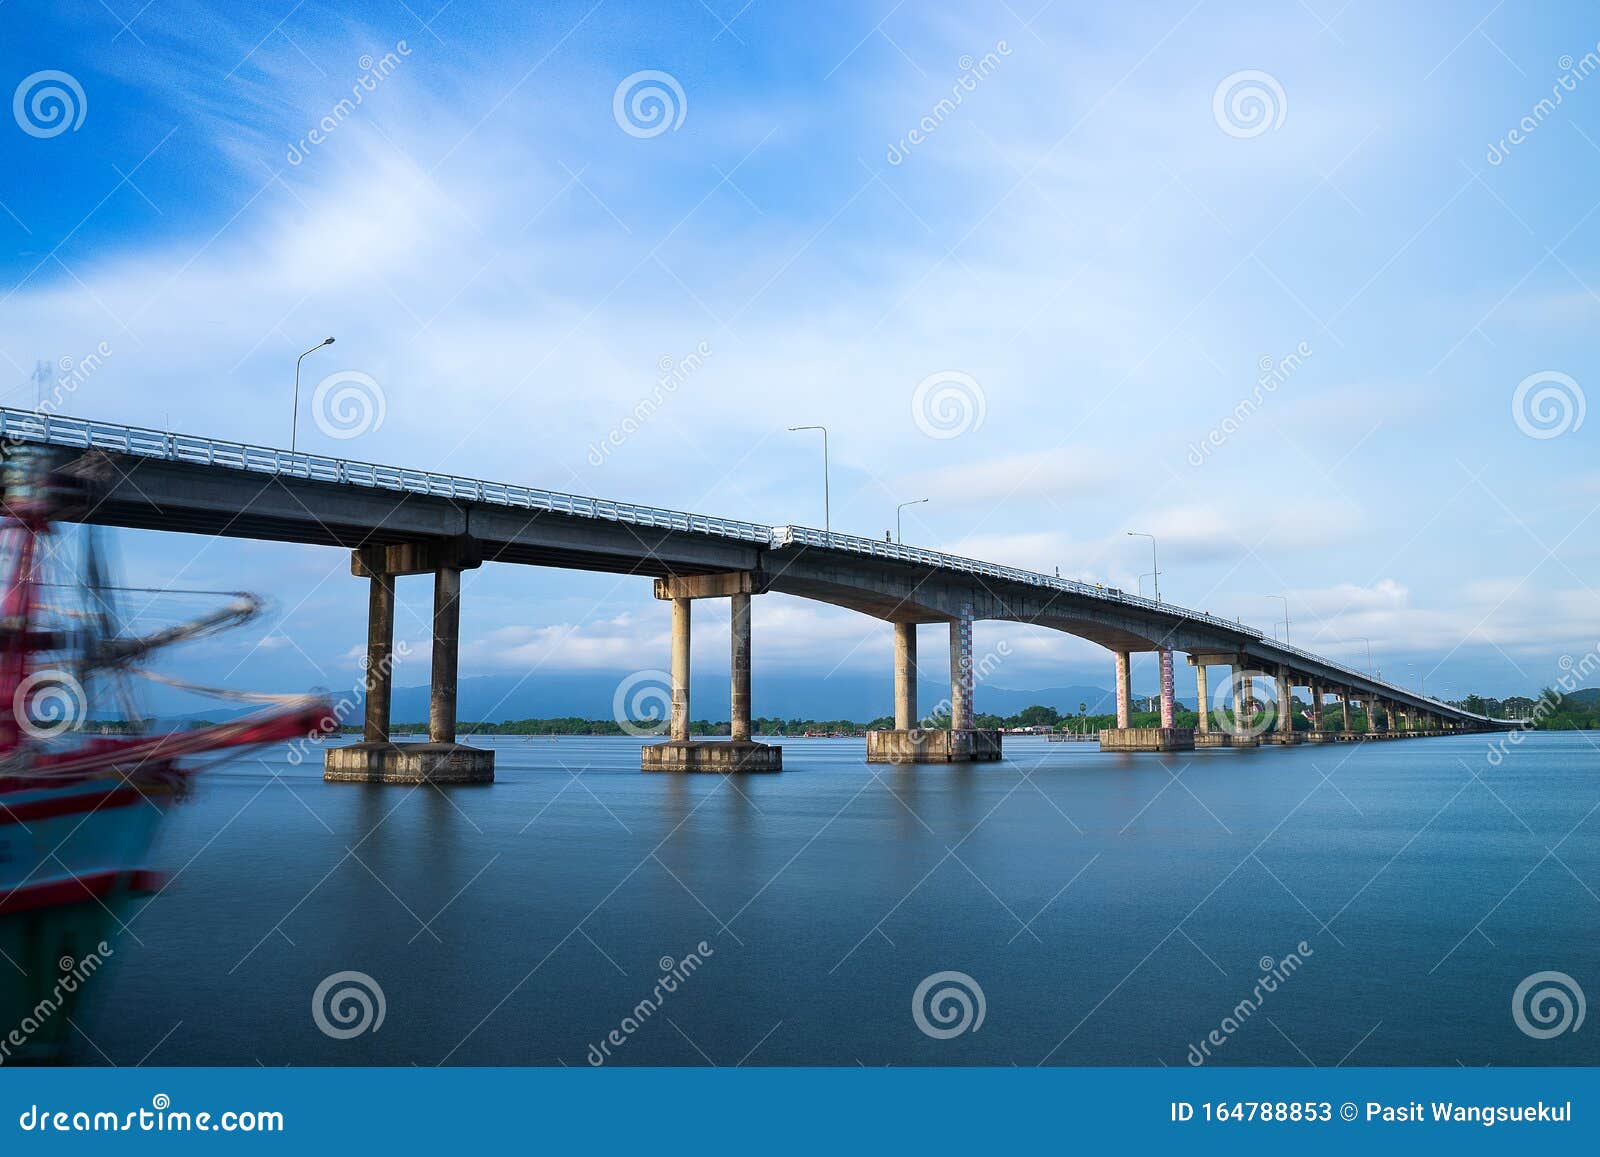 Long Bridge Across The Blue Sea Stock Image Image of